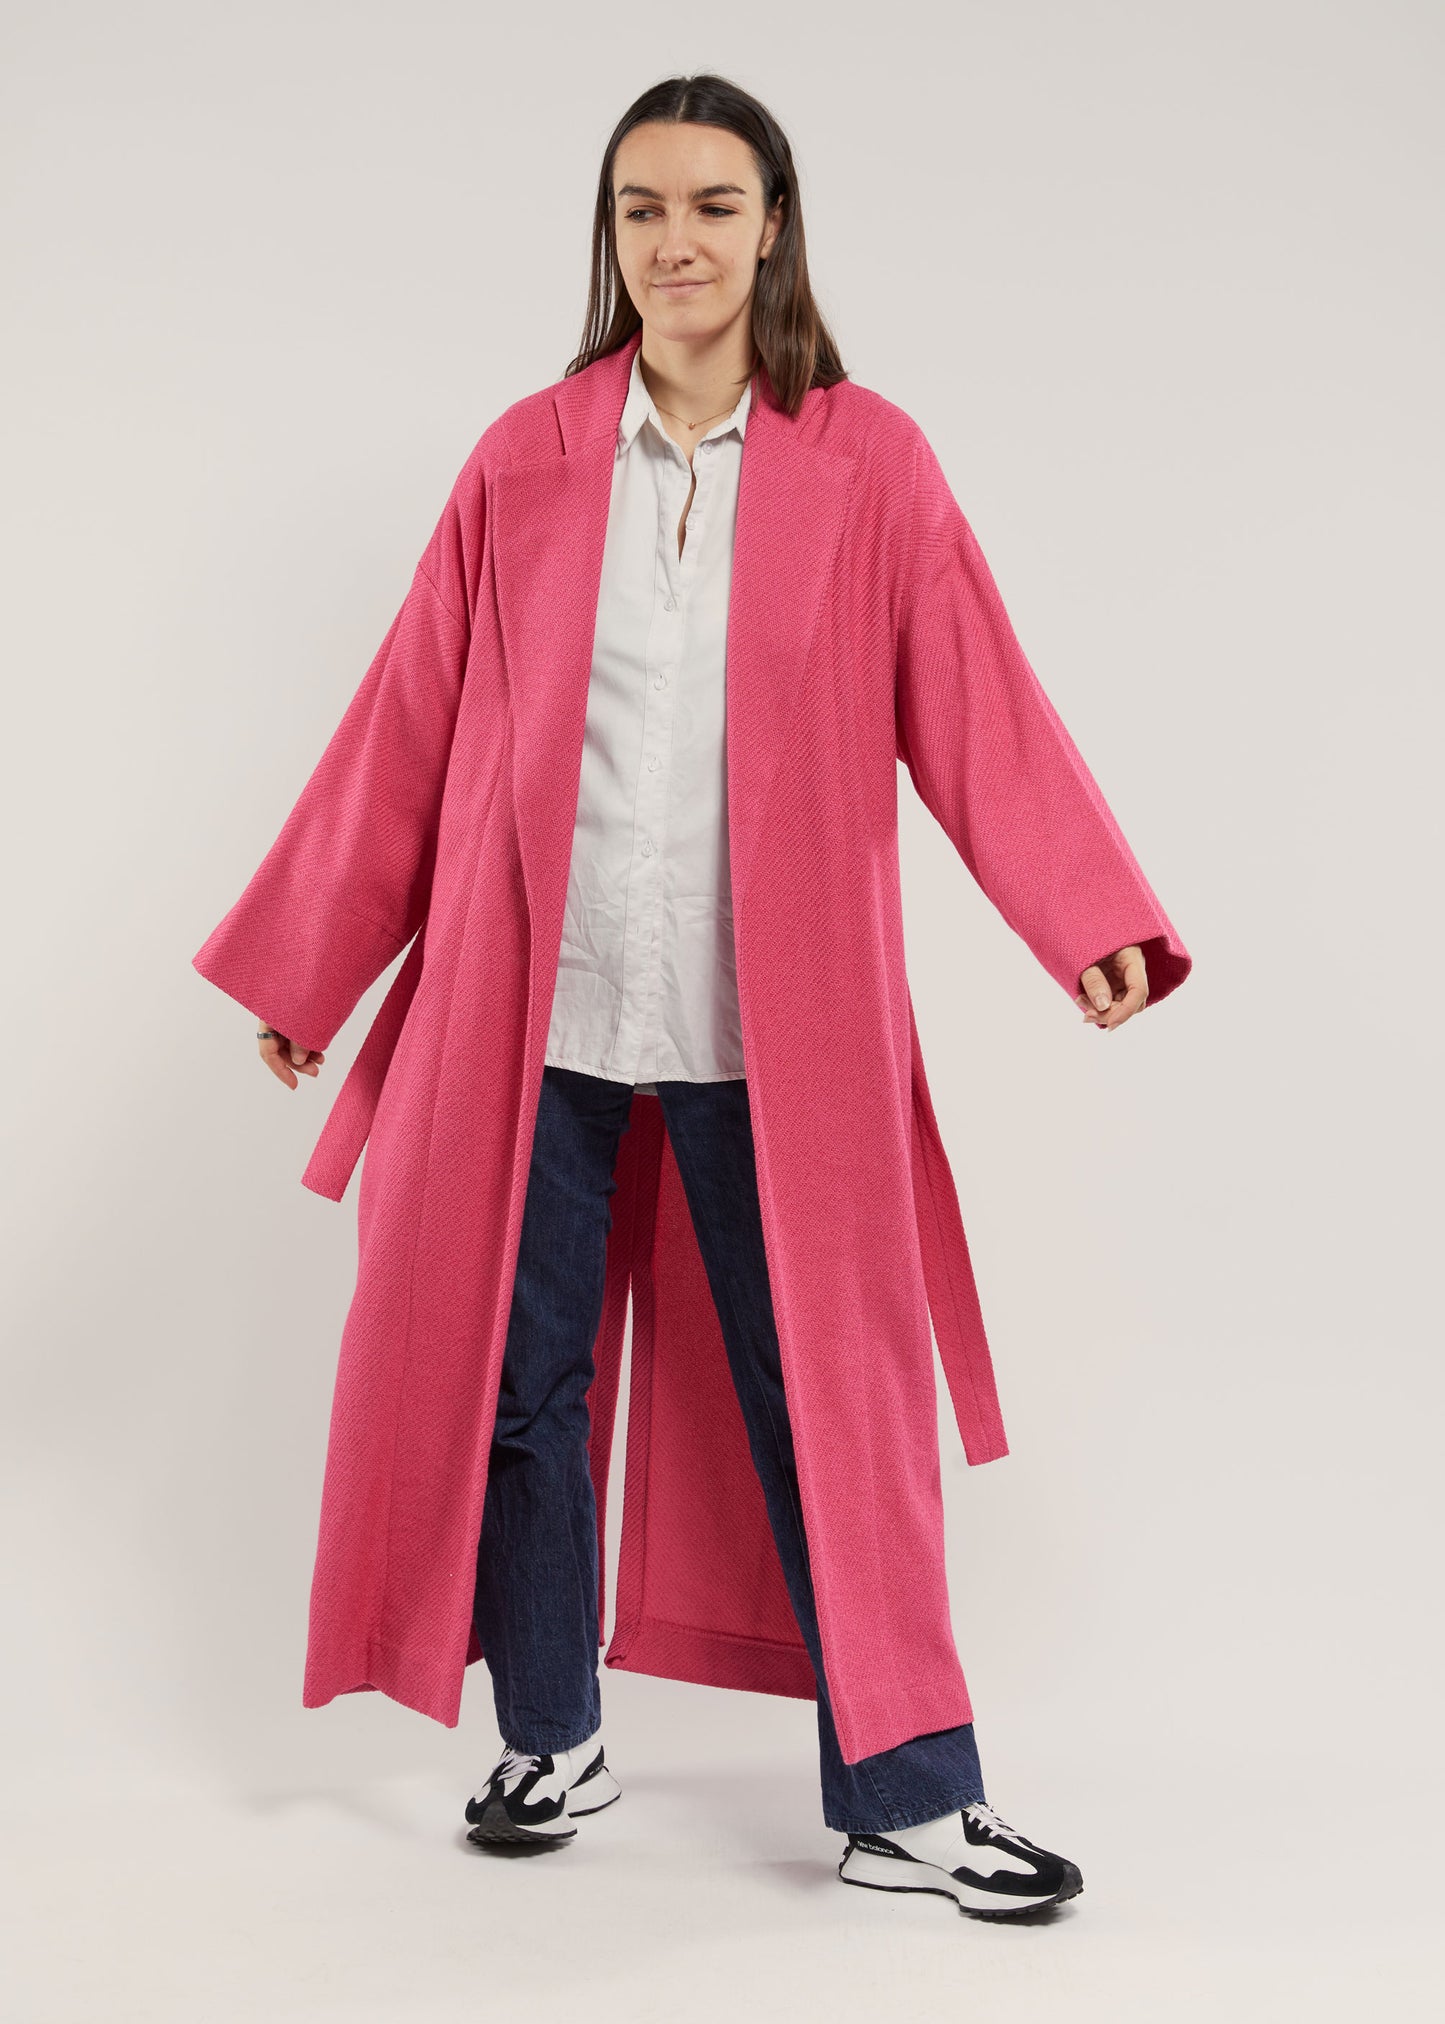 Manteau style tailleur rose